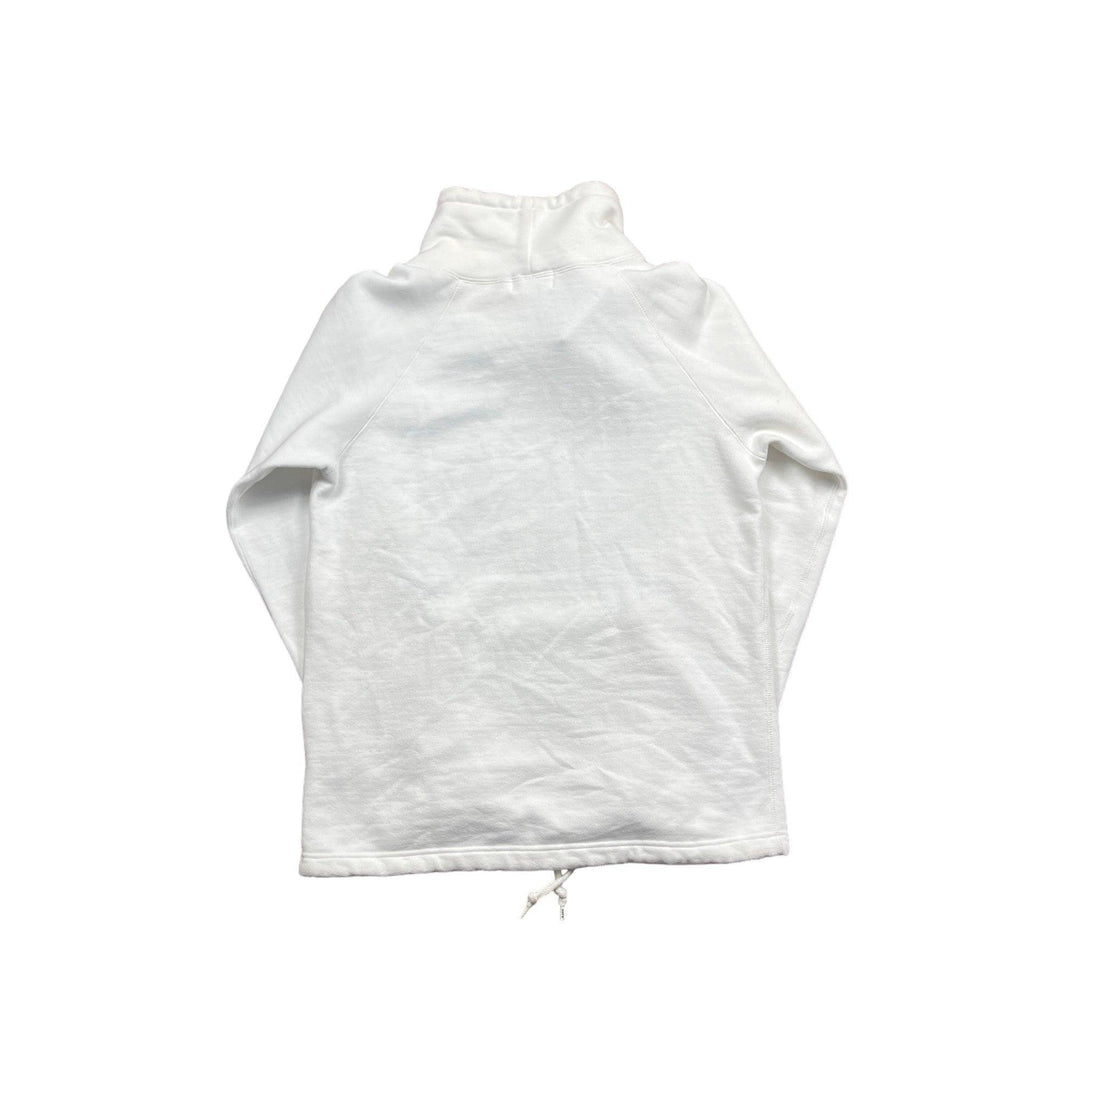 White A Bathing Ape (BAPE) Sweatshirt - Extra Large - The Streetwear Studio